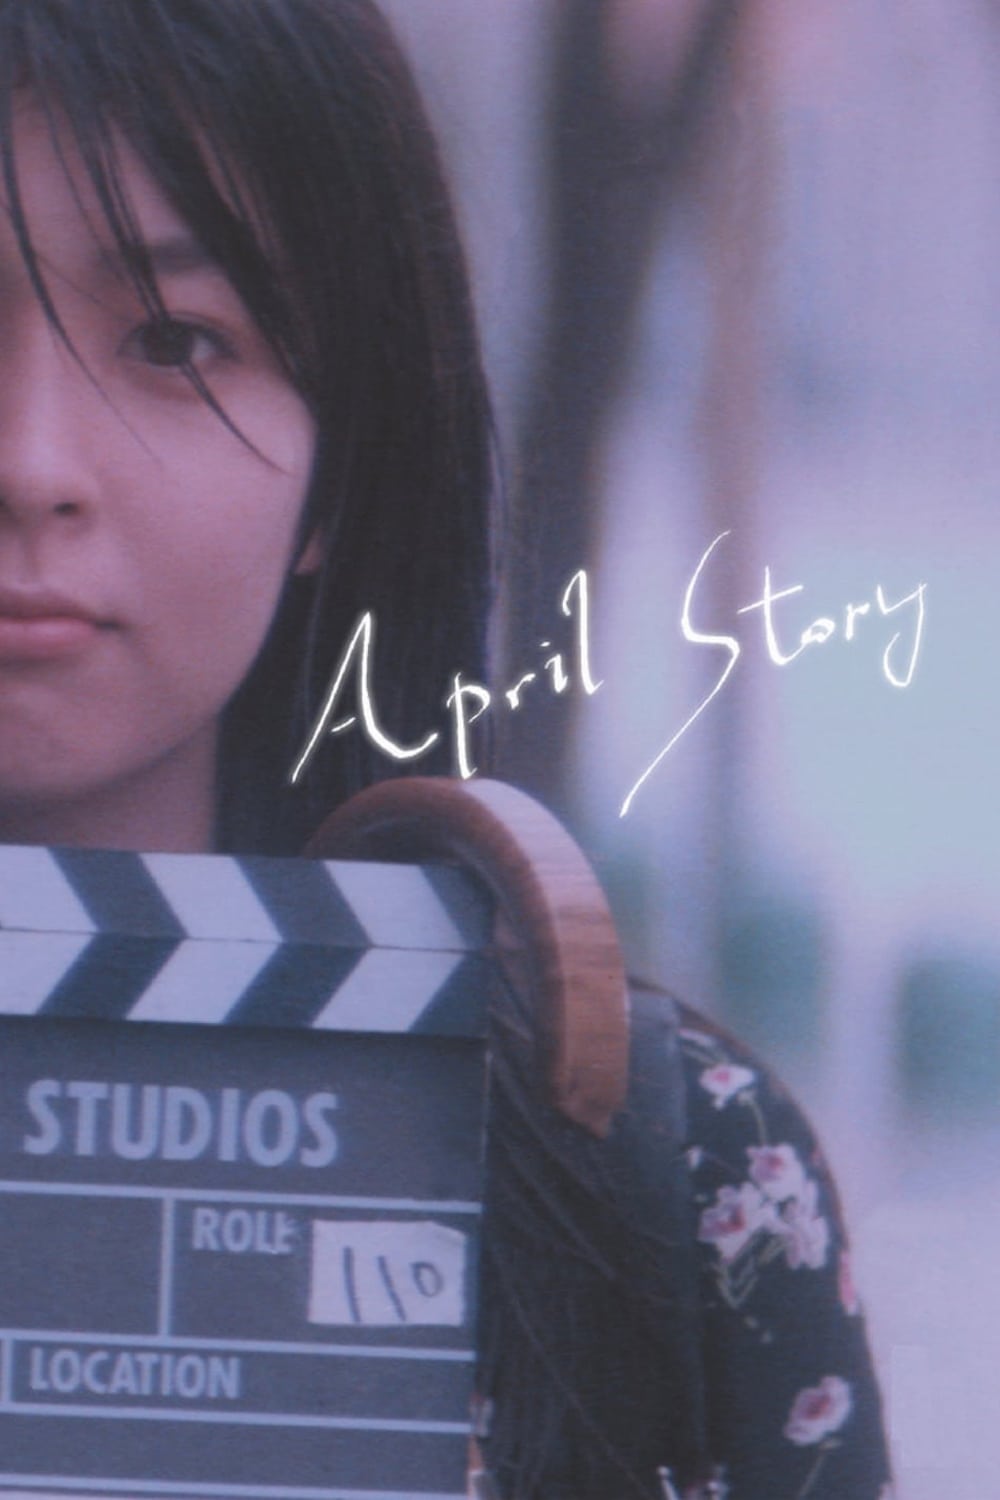 April Story (1998)